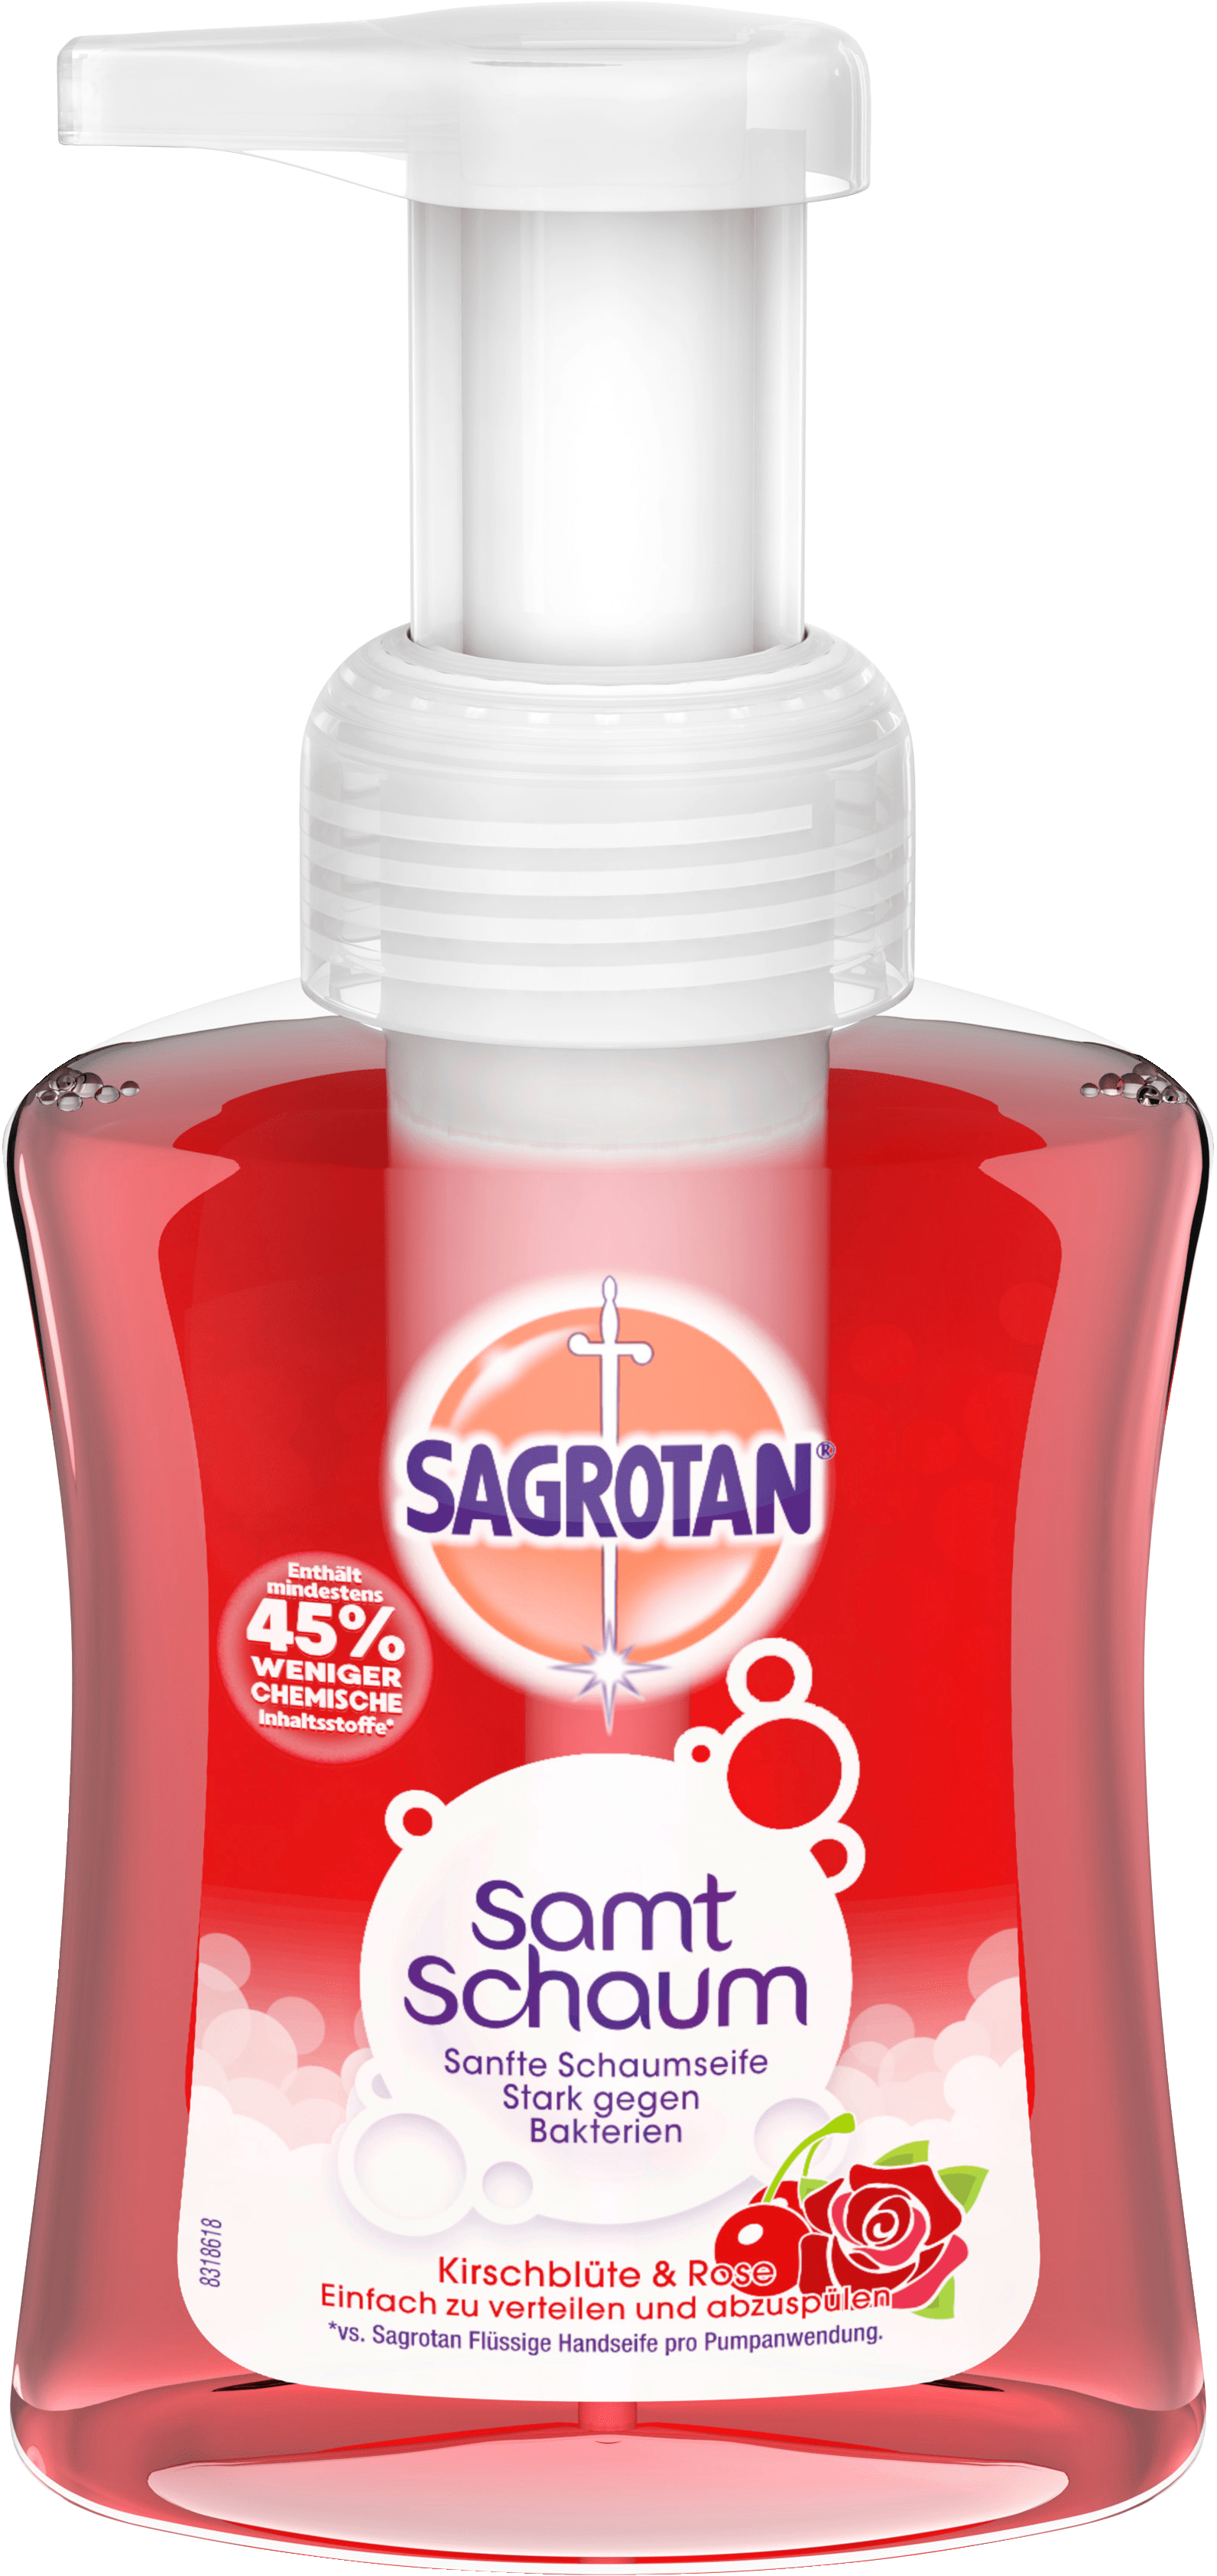 Sagrotan Foam Soap, Cherry Blossom And Rose, 250 Ml